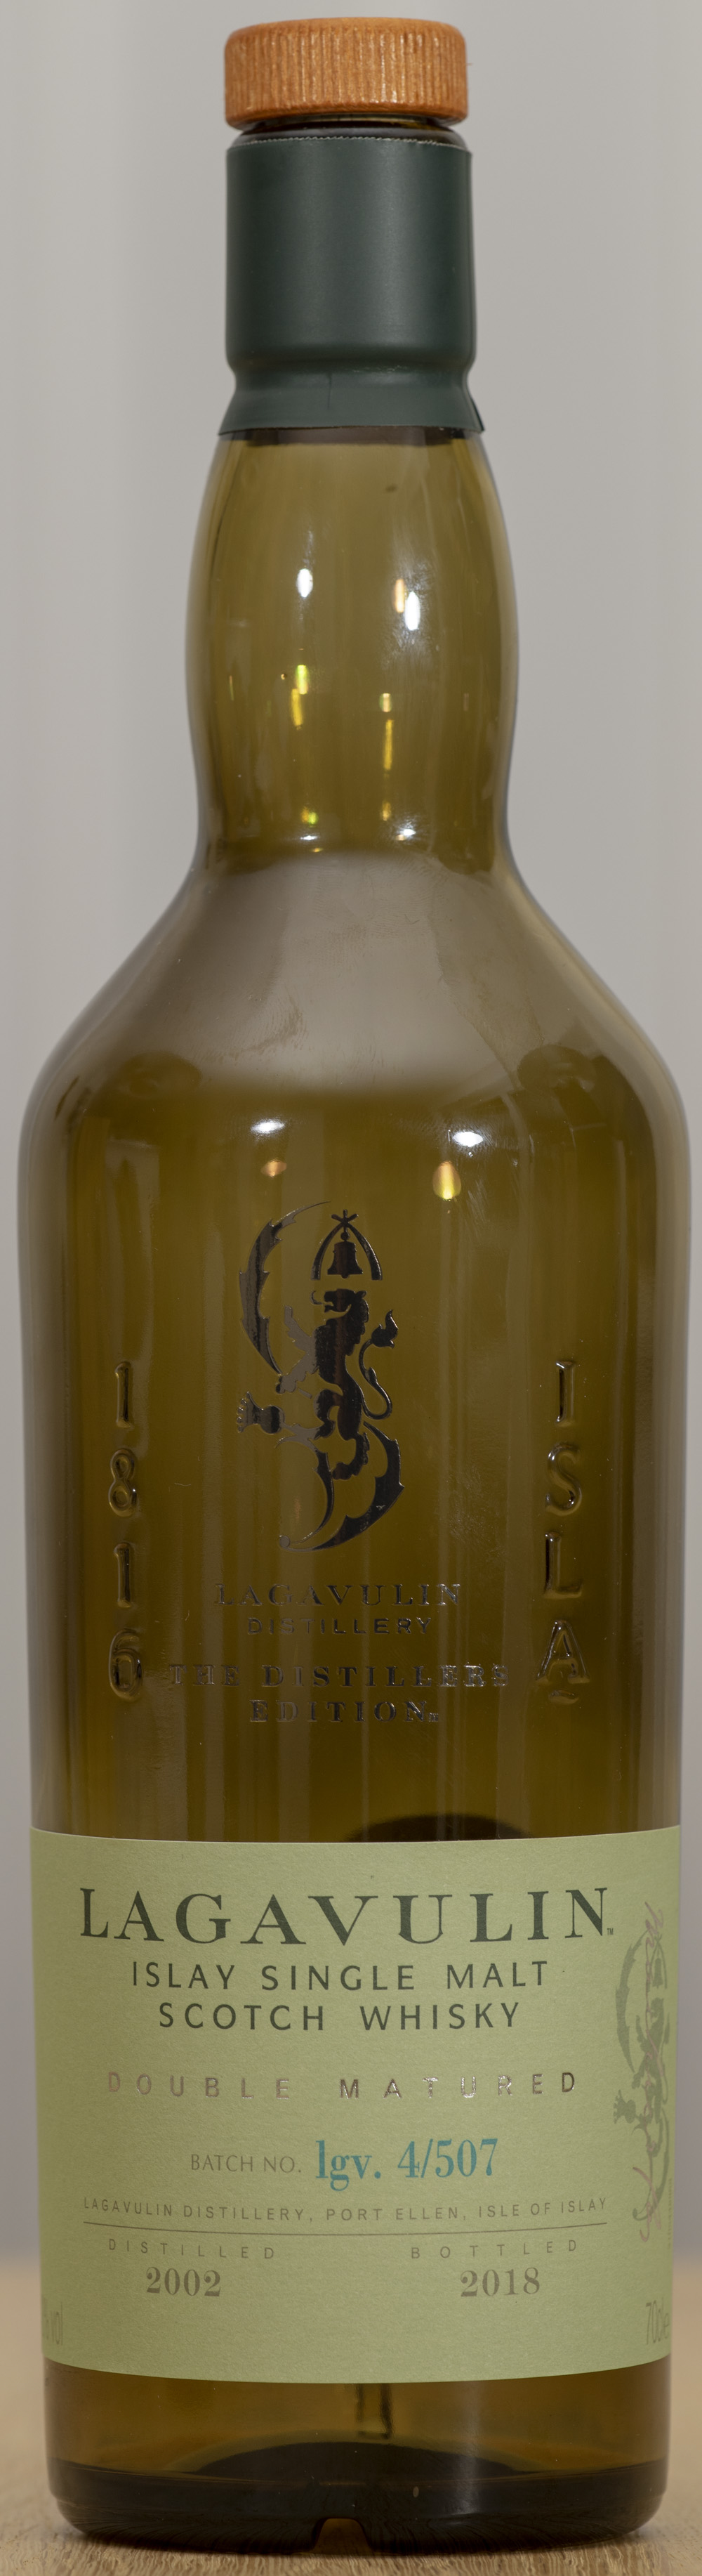 Billede: PHC_1586 - Lagavulin Distillers Edition - bottle front.jpg